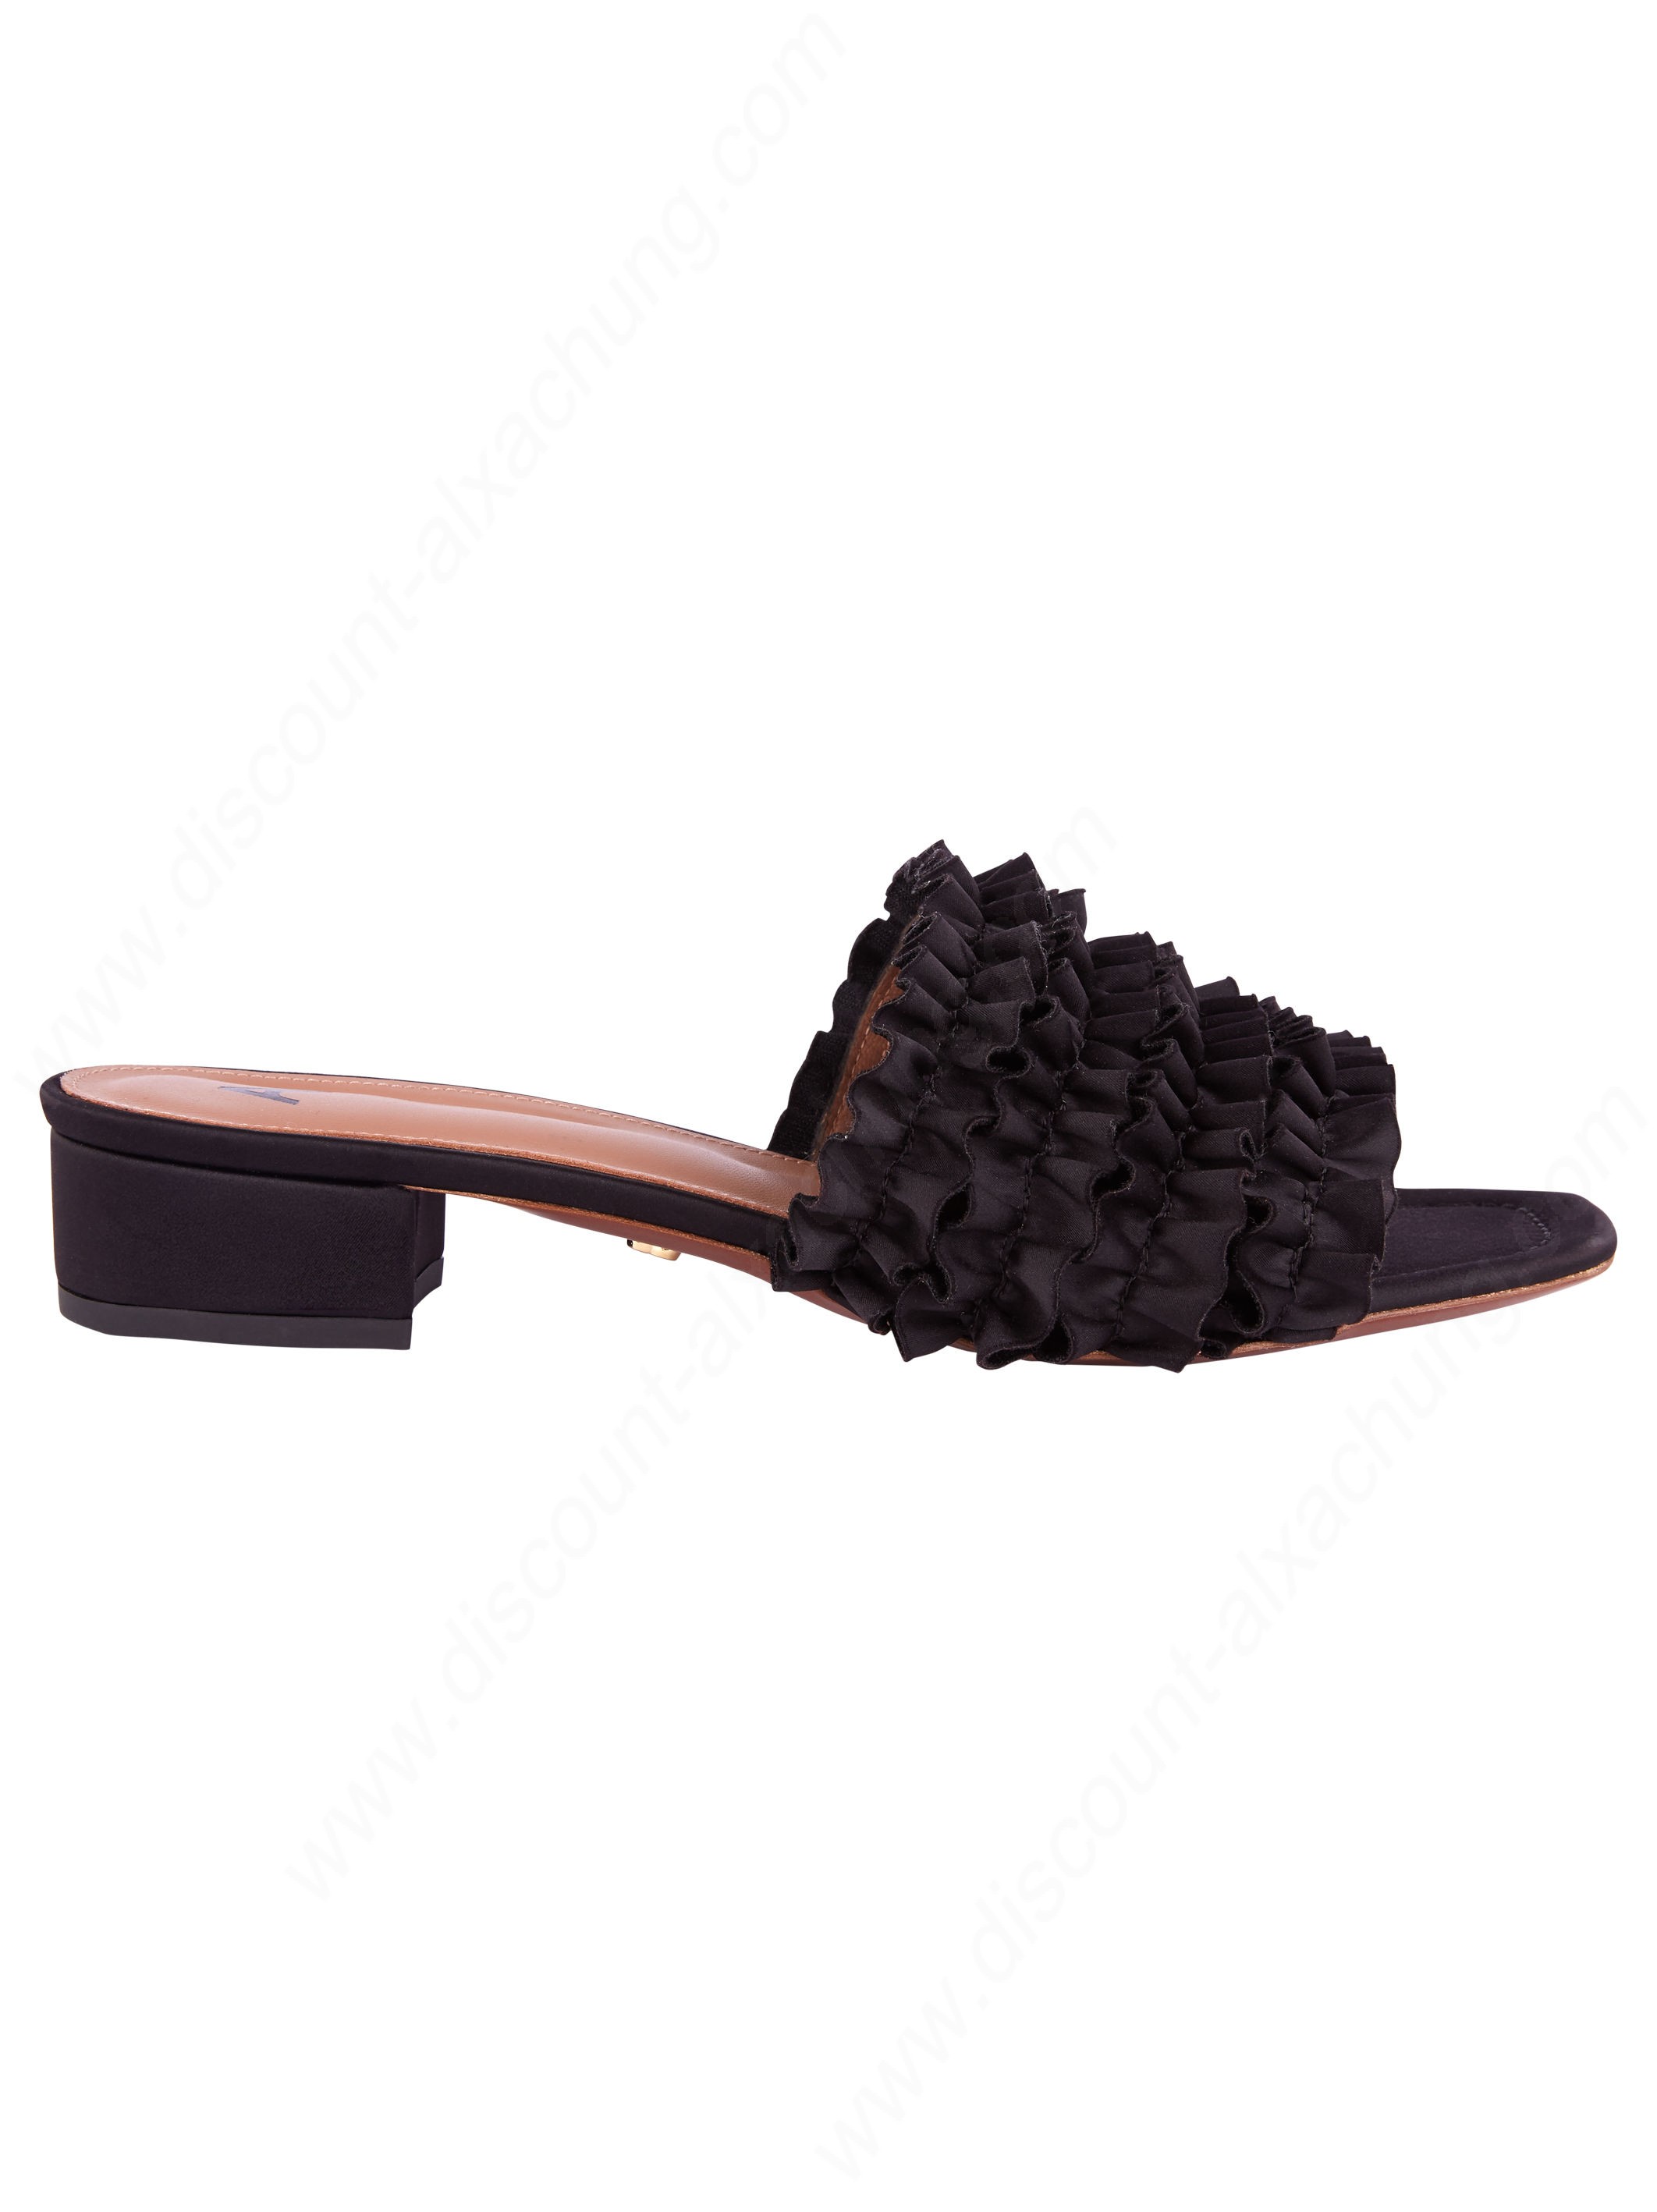 Alexachung Black Ruffle Sandal - Alexachung Black Ruffle Sandal